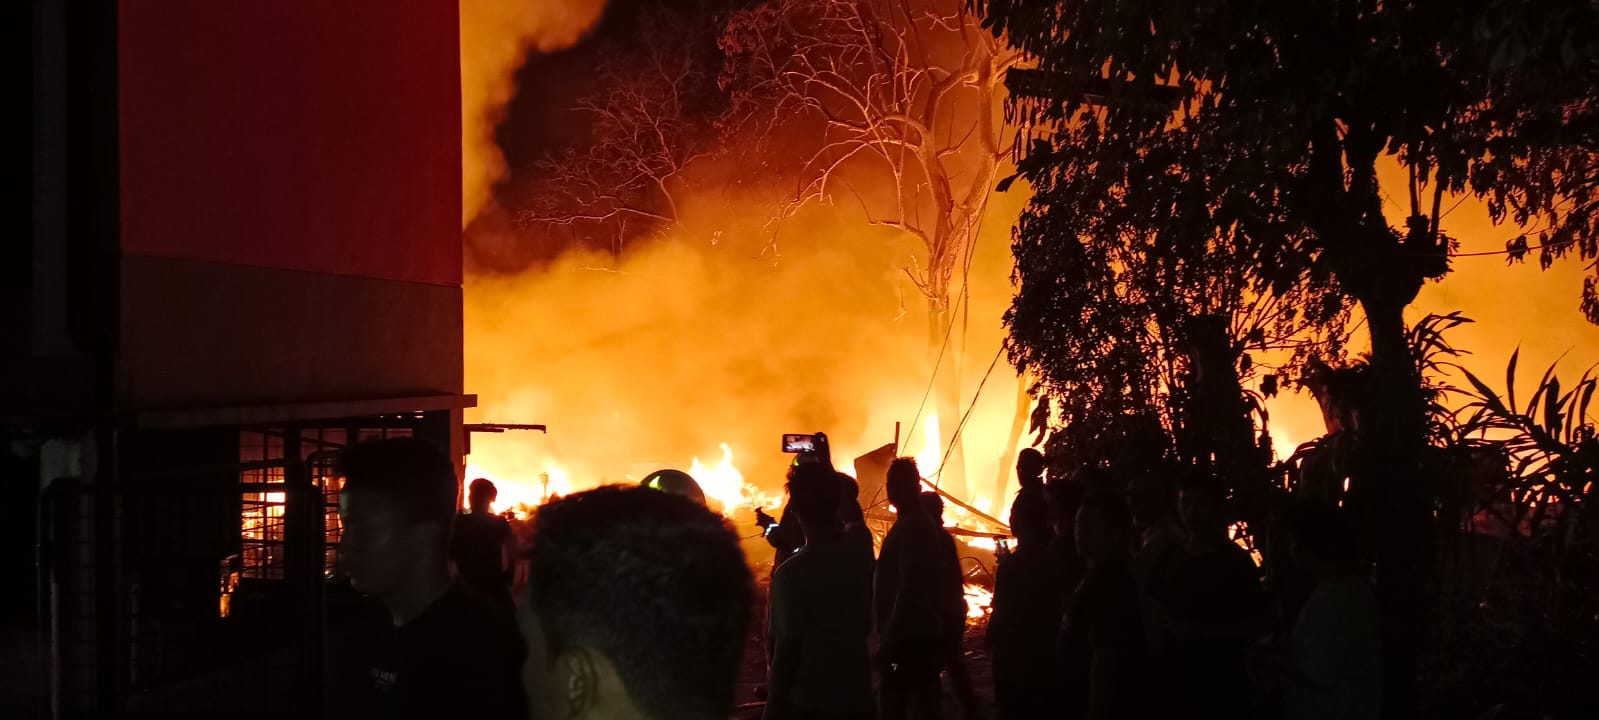 Kebakaran Hanguskan Lapak Barang Bekas di Pondok Pinang, Warga Panik Teriak Minta Tolong